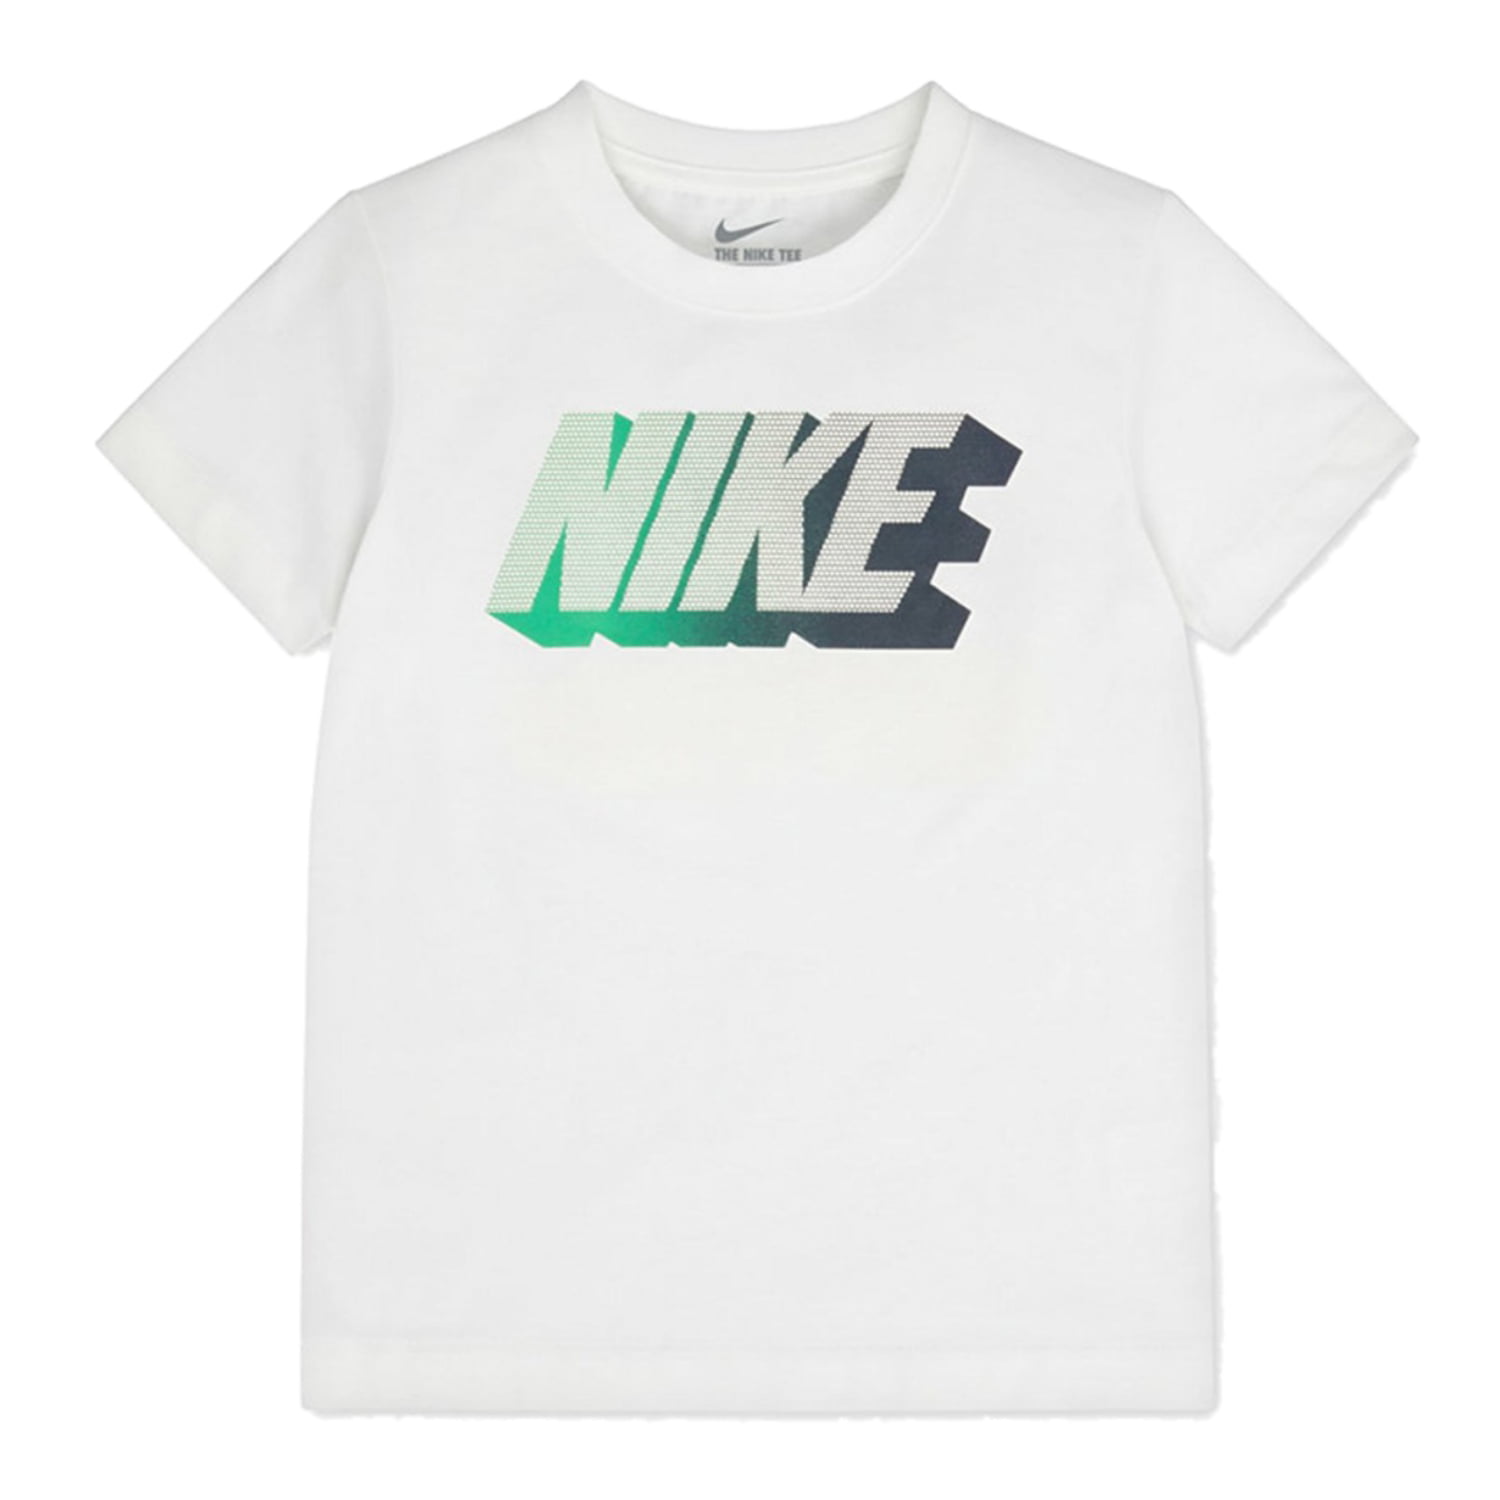 Nike - Nike Boys White Gradient Short Sleeve Tee T-Shirt - Walmart.com ...